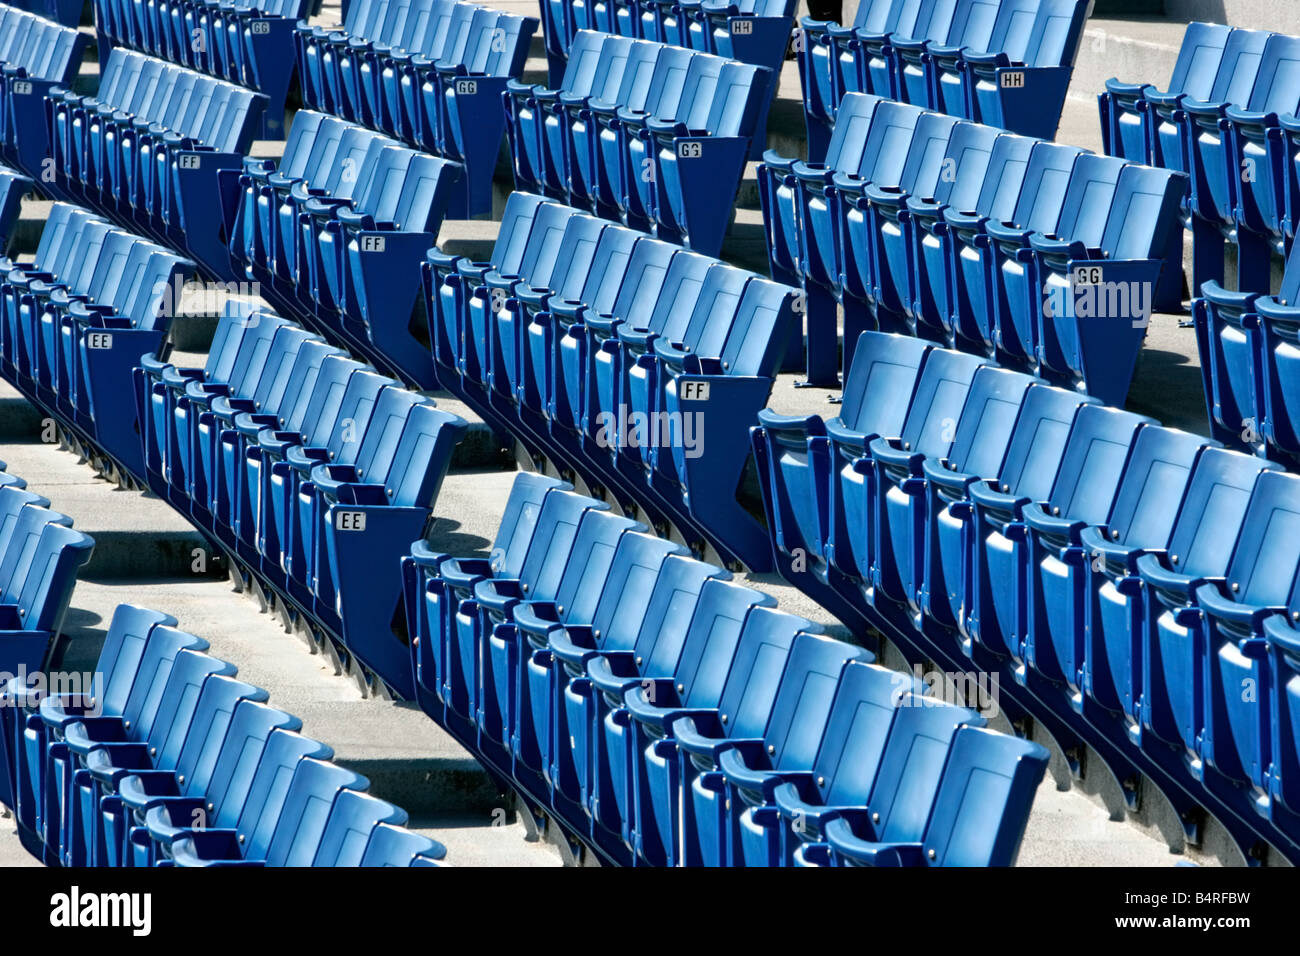 rows-of-empty-blue-seats-at-a-baseball-stadium-B4RFBW.jpg